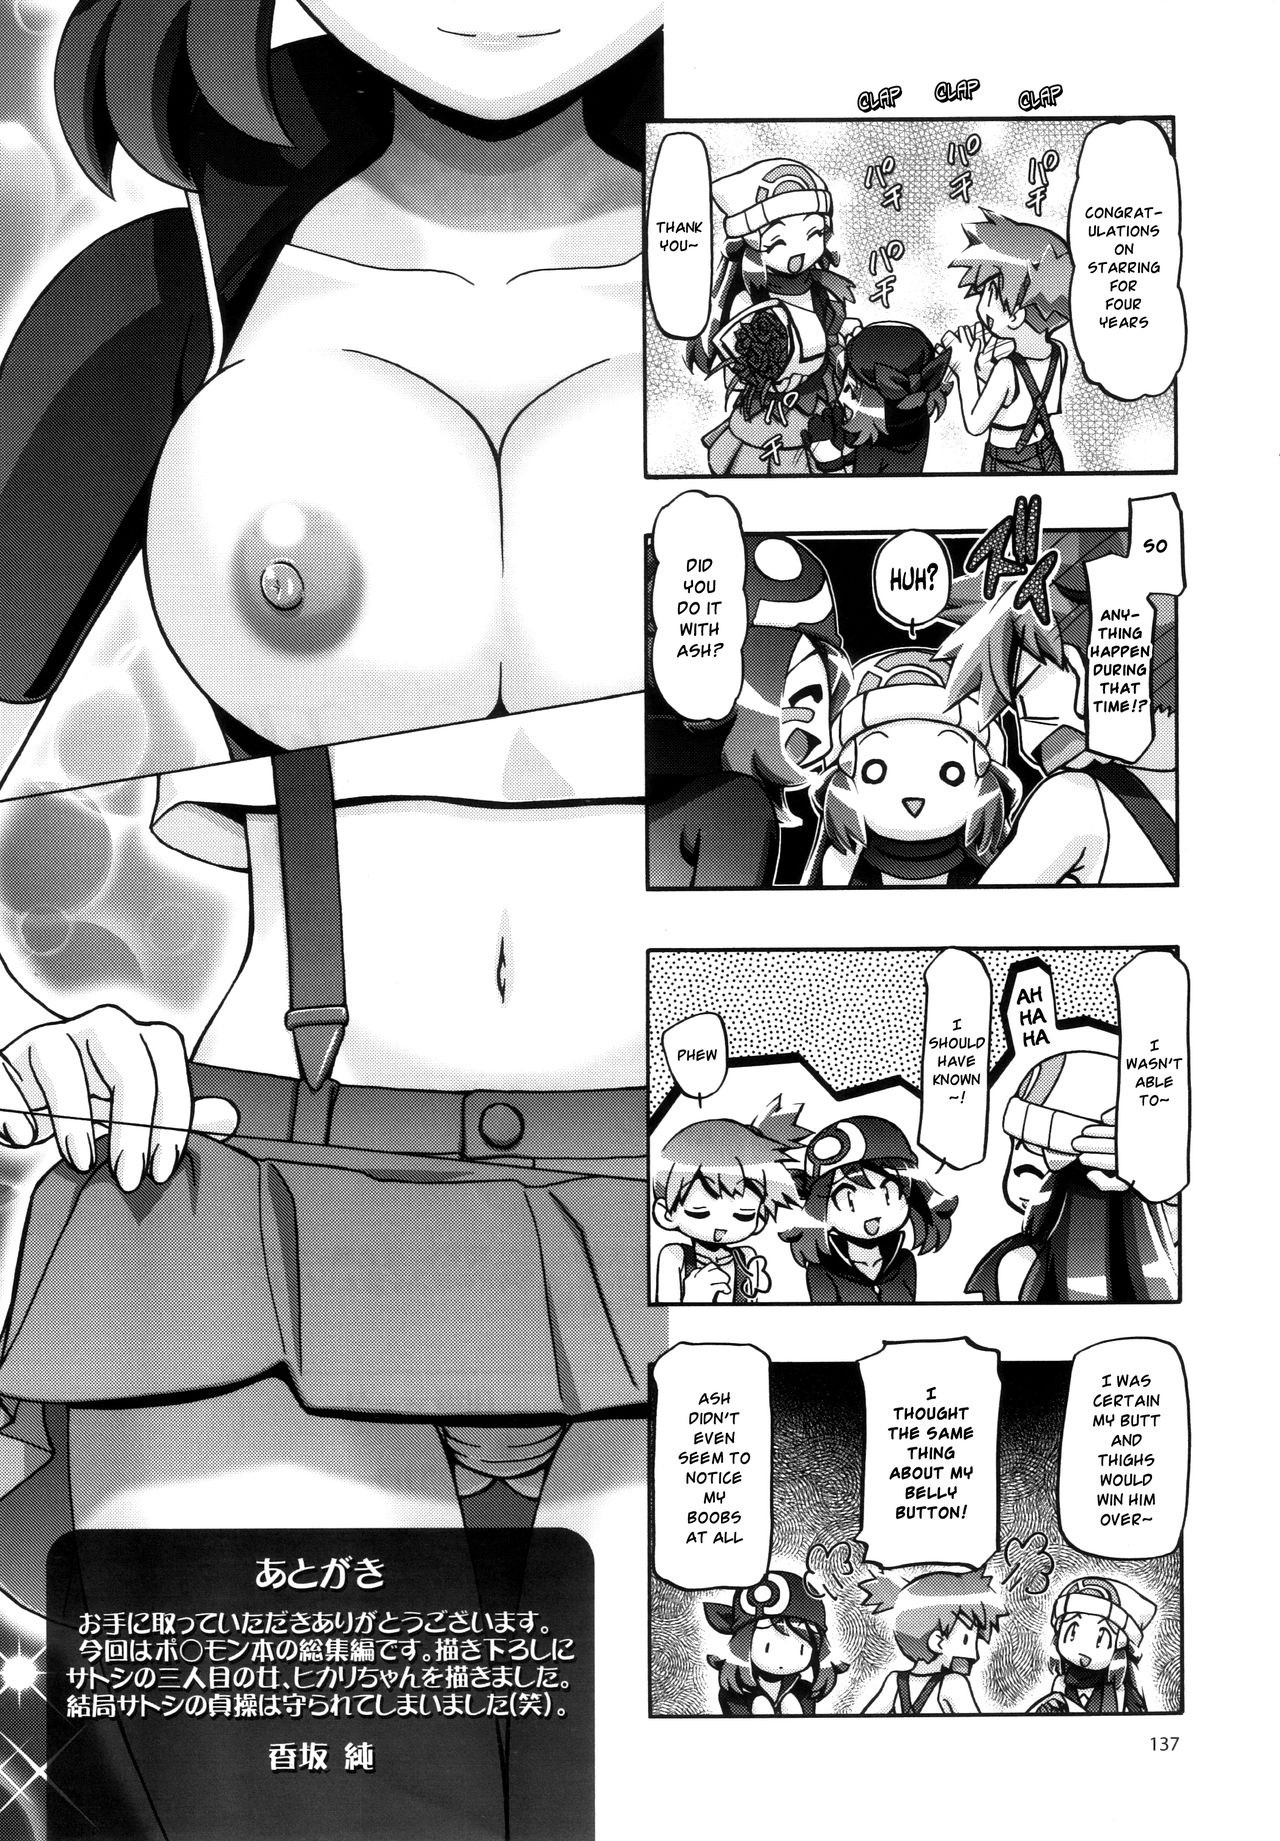 PM GALS Compilation hentai manga picture 133